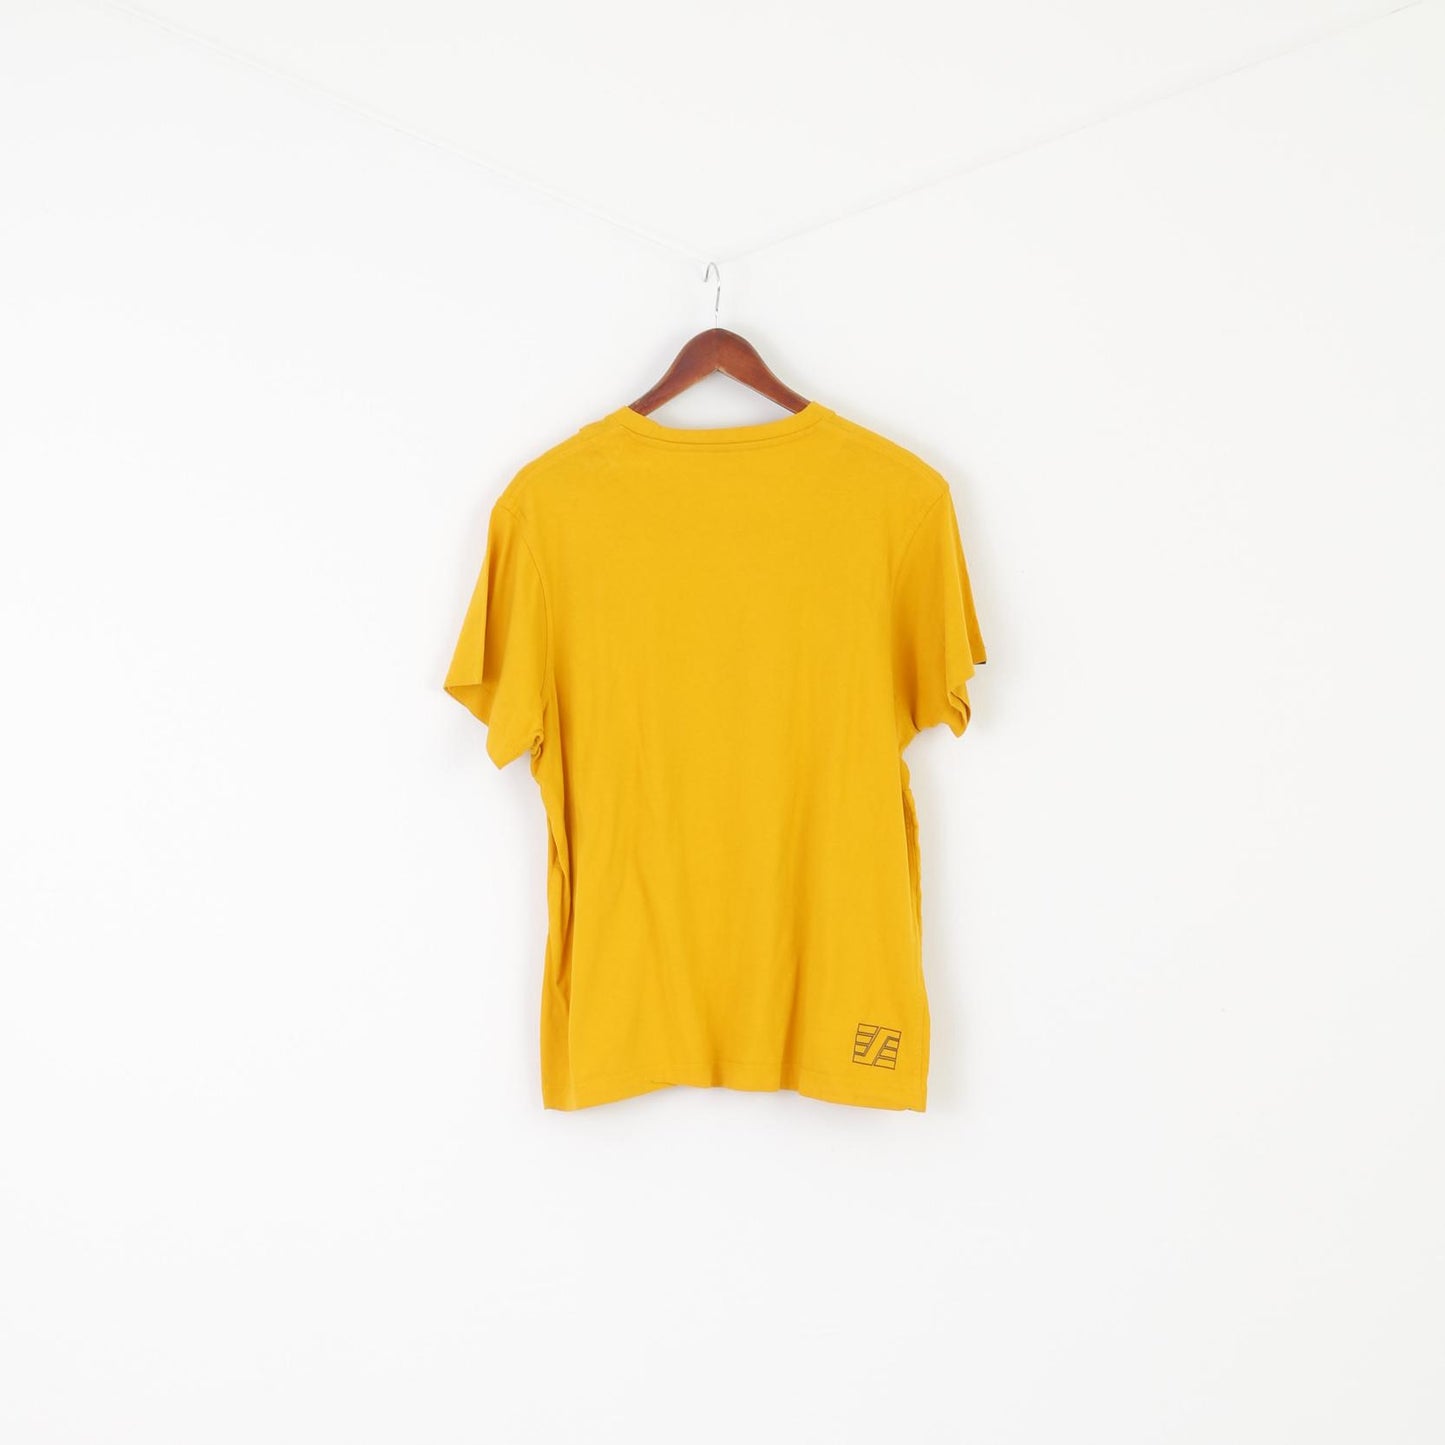 Snickers Workwear Men L Shirt Yellow Cotton Vintage Industrial Crew Neck Top